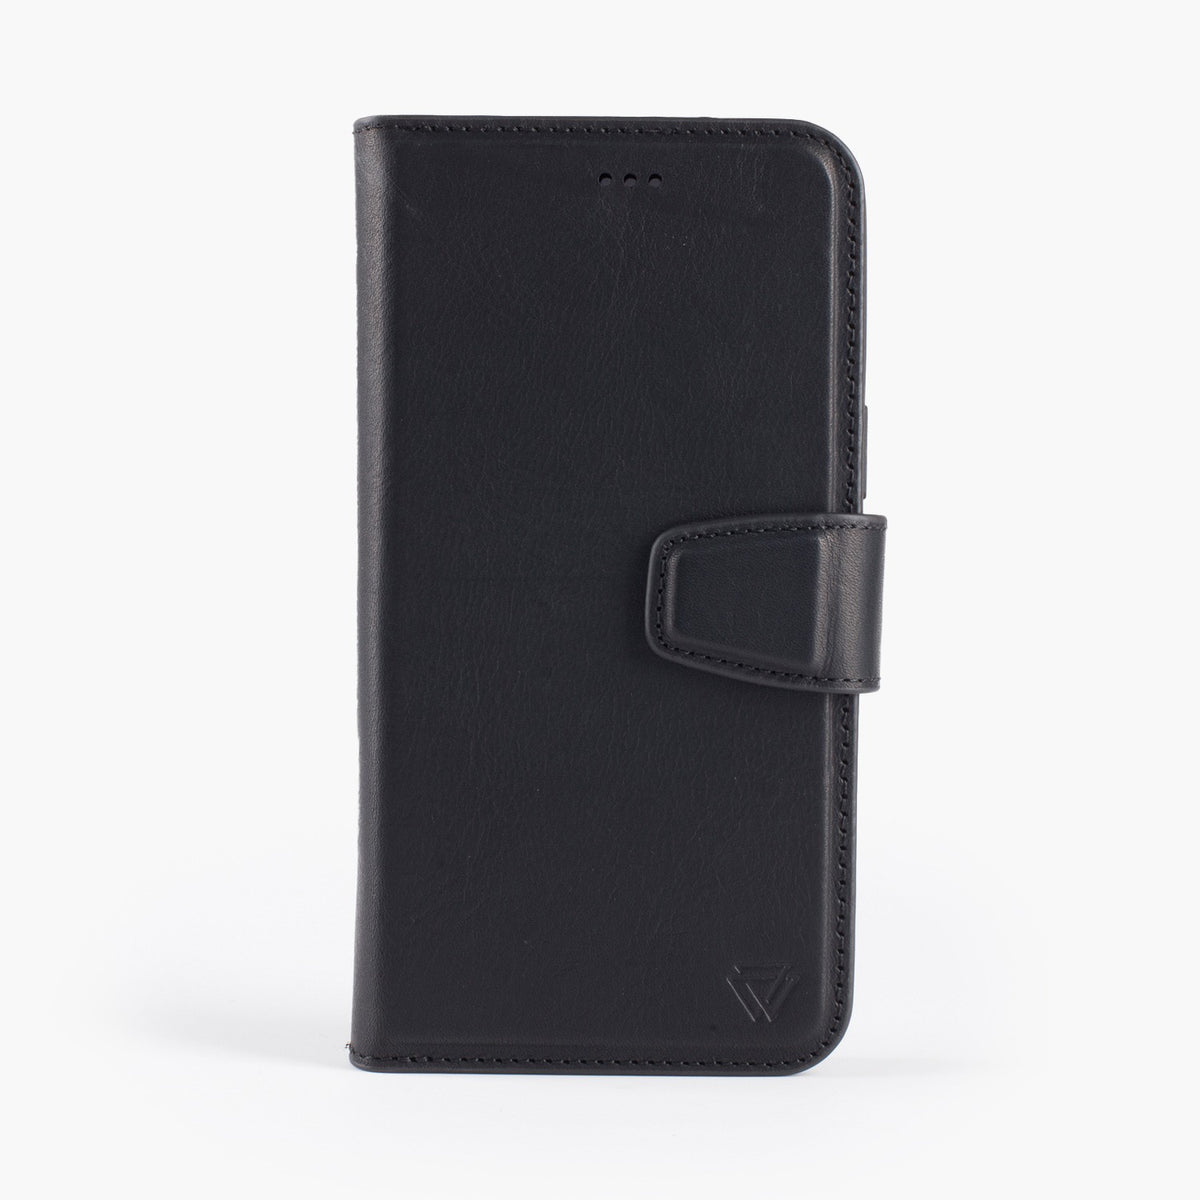 Wachikopa leather Magic Book Case 2 in 1 for iPhone 7/8 Plus Black